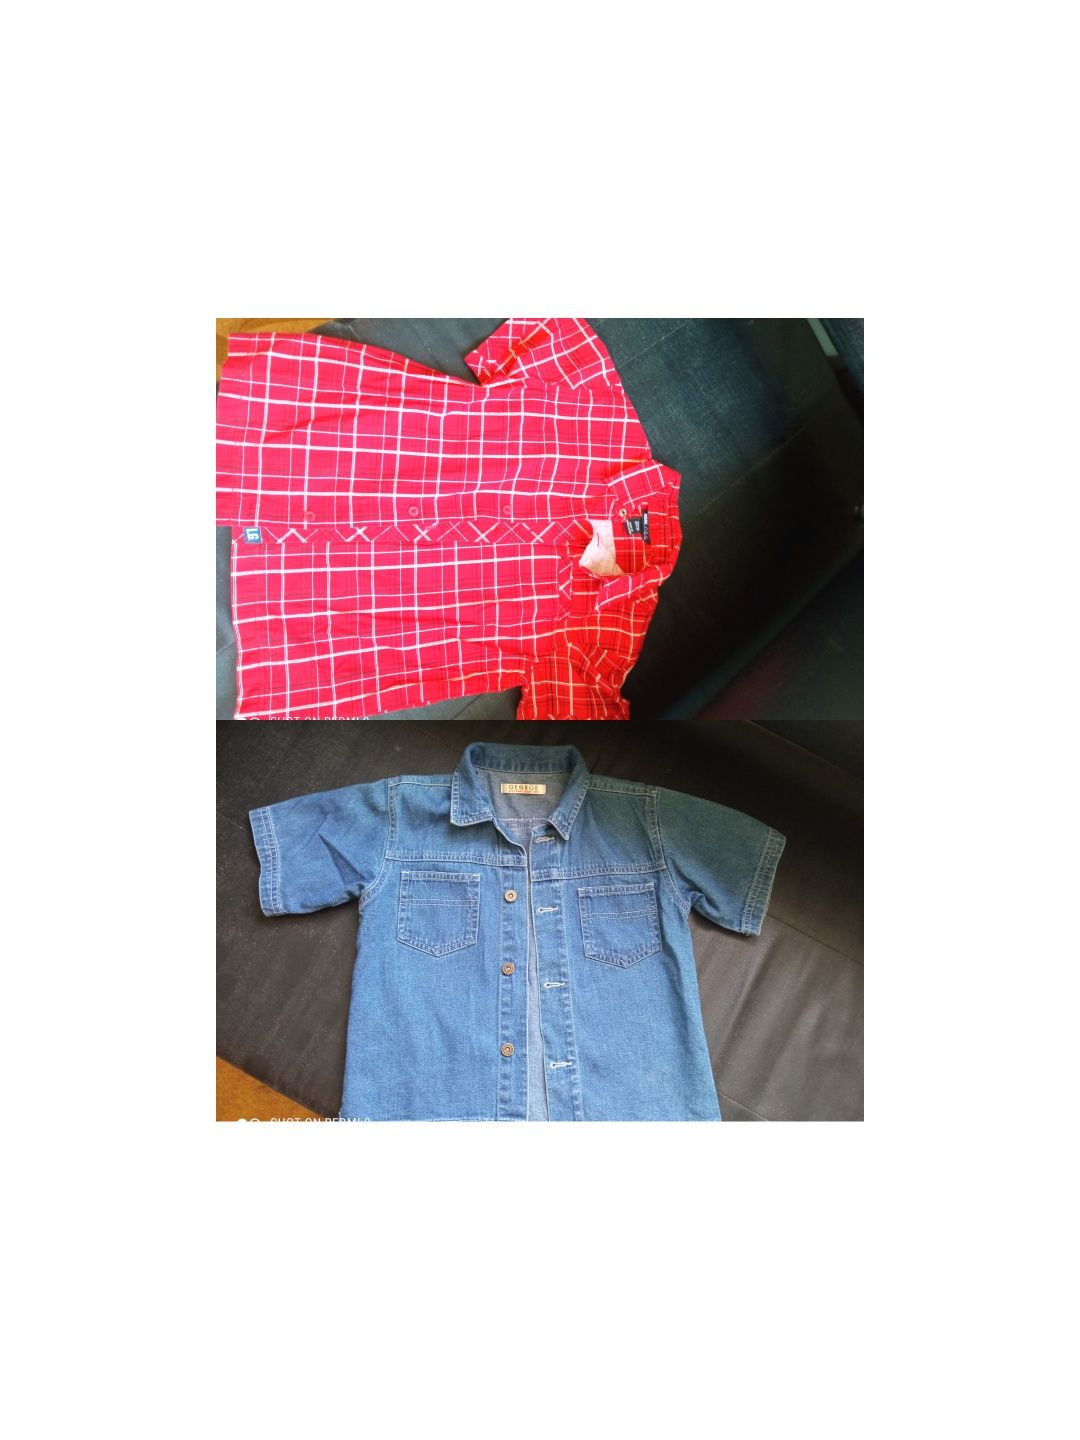 Рубашки для мальчика Tommy Hilfiger H&M и Gegrge